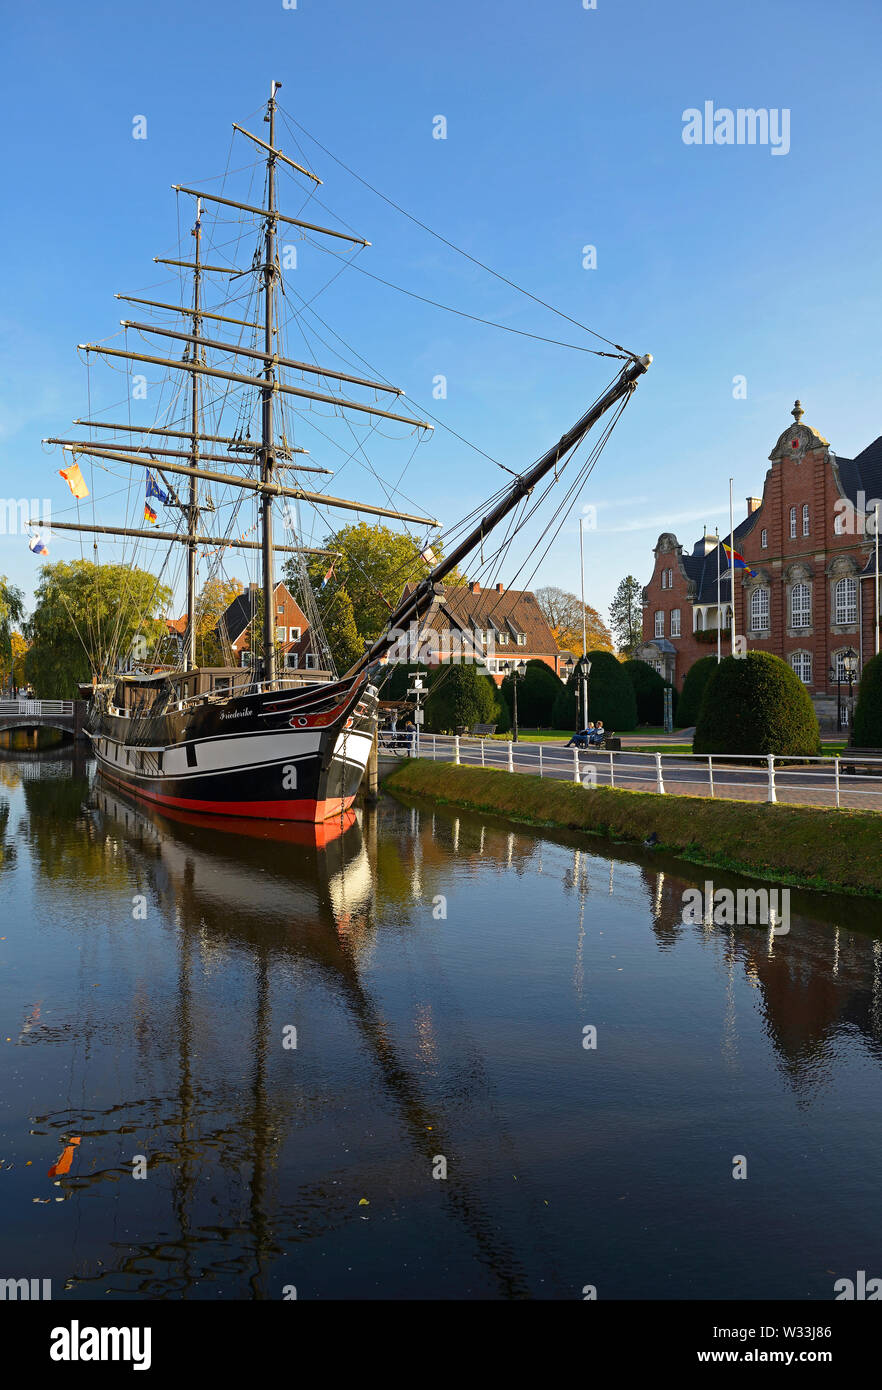 papenburg, niedersachsen/germany - october 10, 2018: view onto the main canal ( hauptkanal ) with the replica of the cargo brig friederike von papenbu Stock Photo